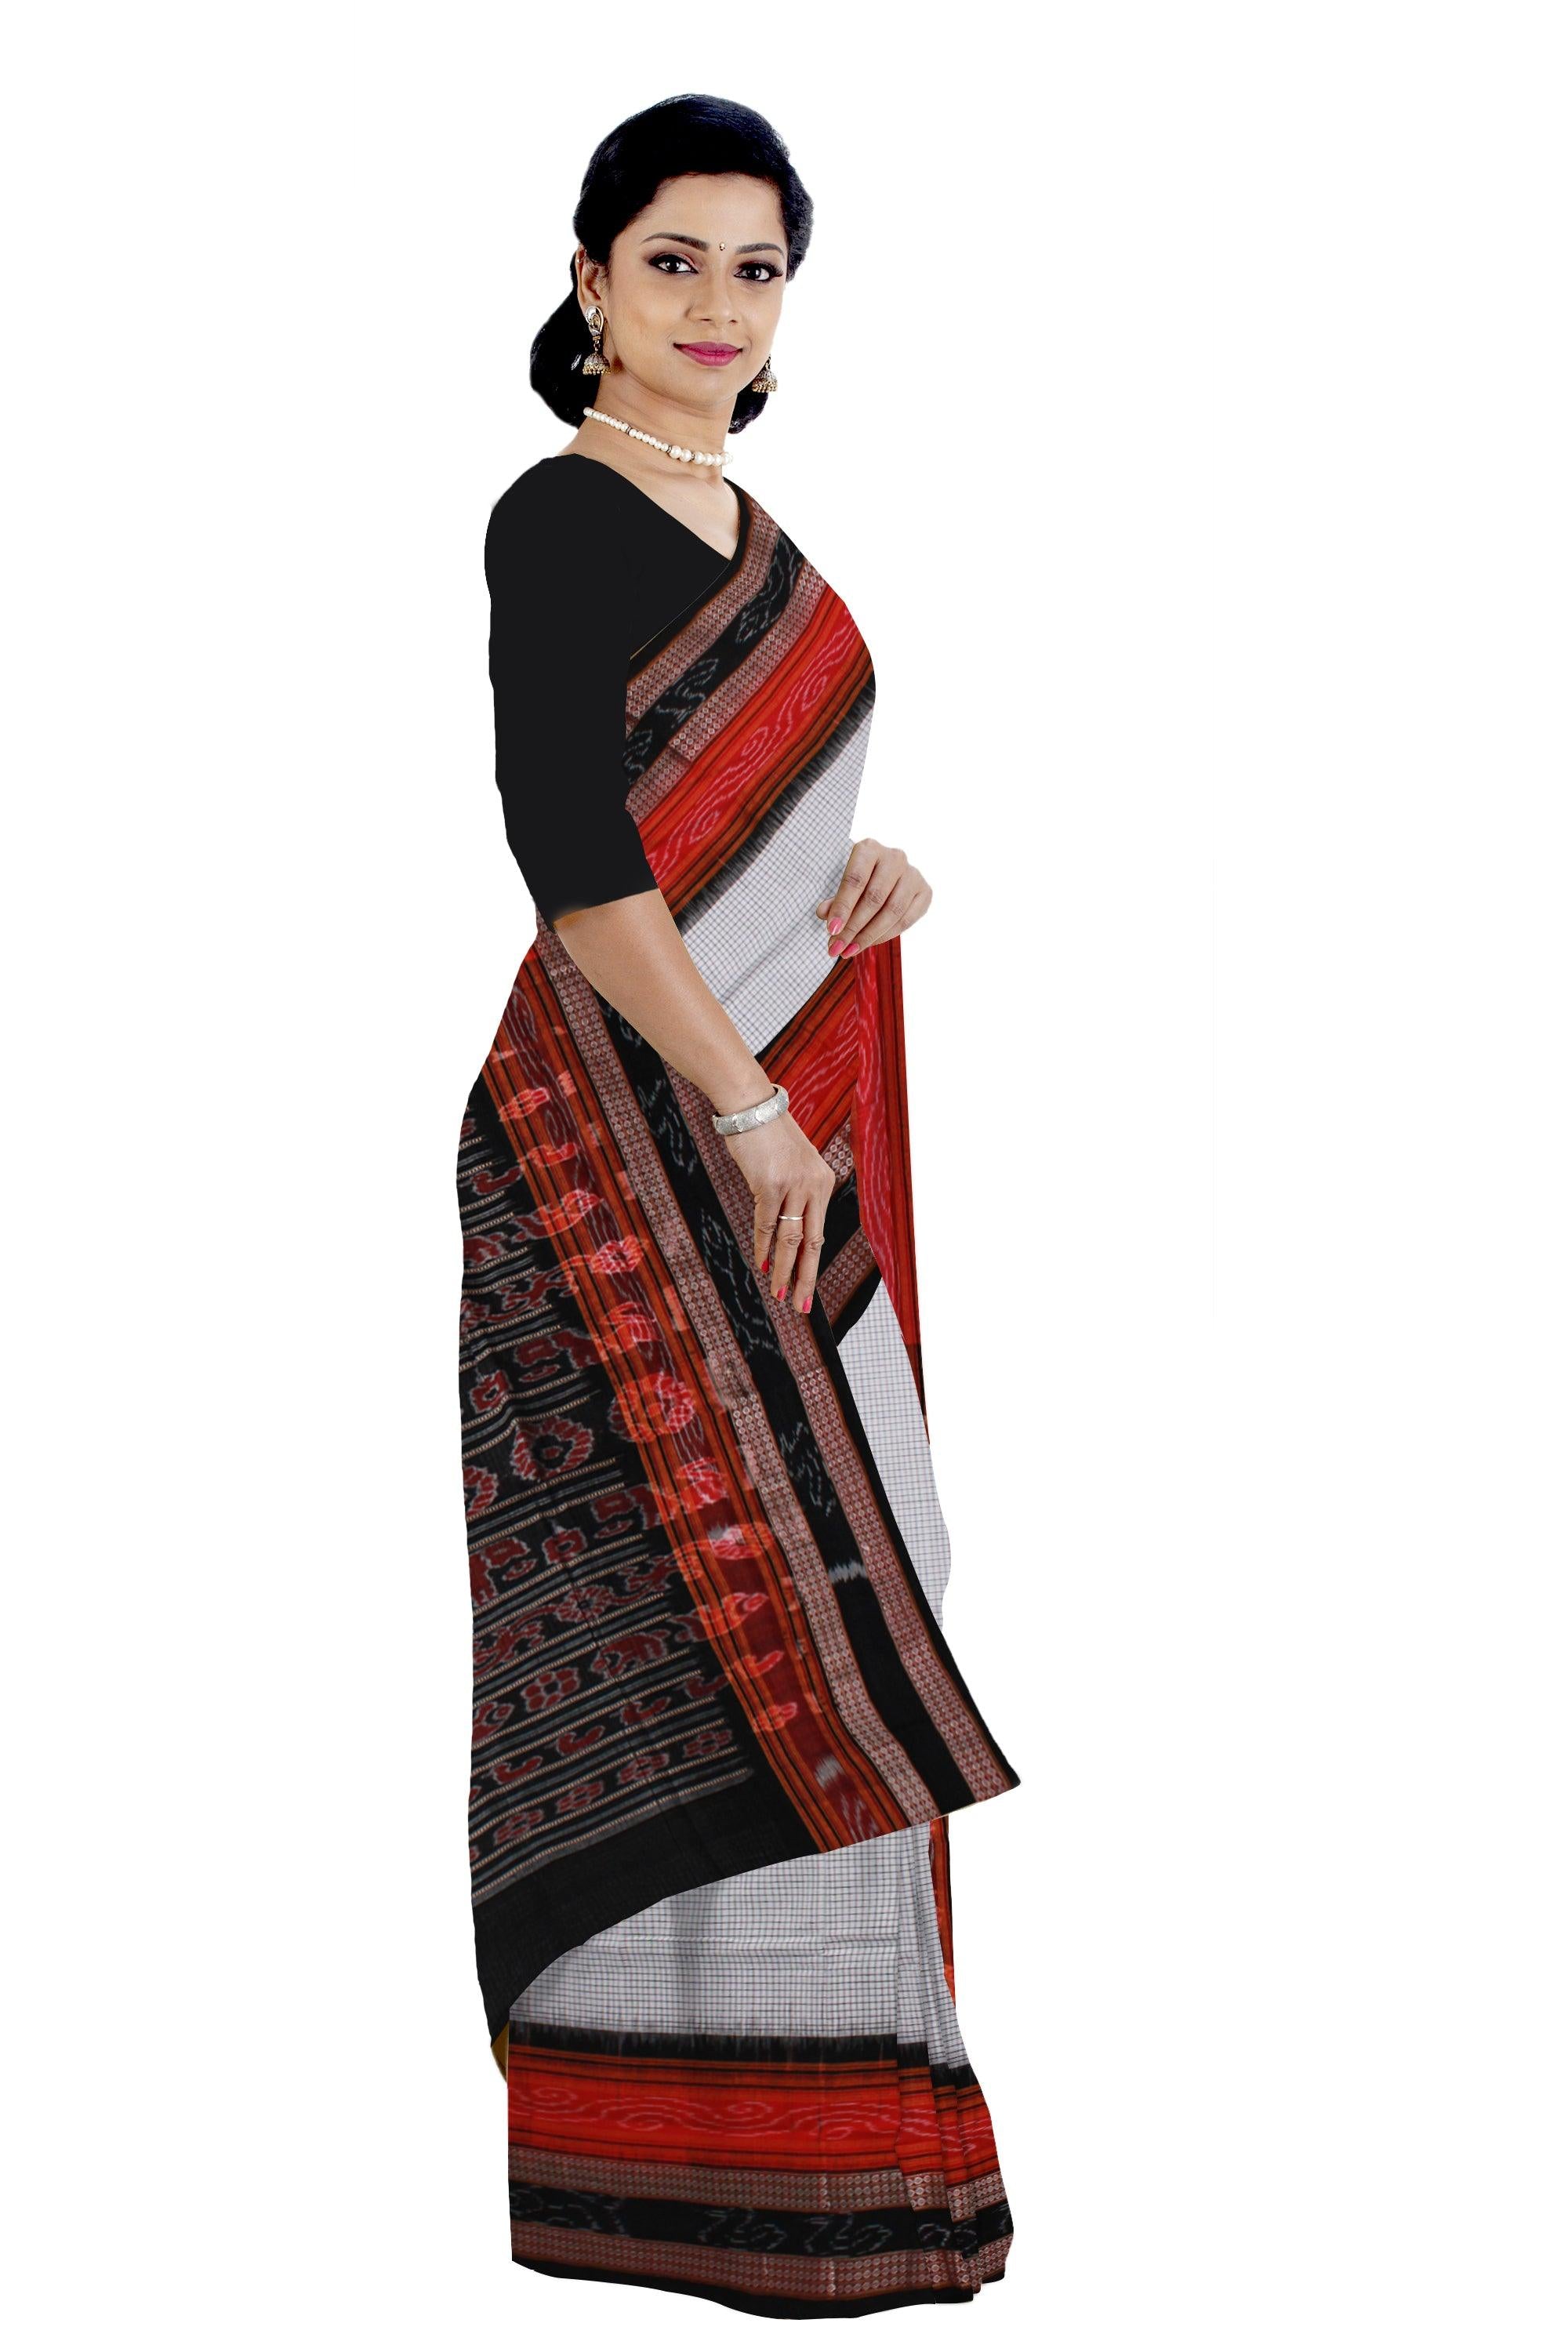 White color checked sachipur saree - Koshali Arts & Crafts Enterprise